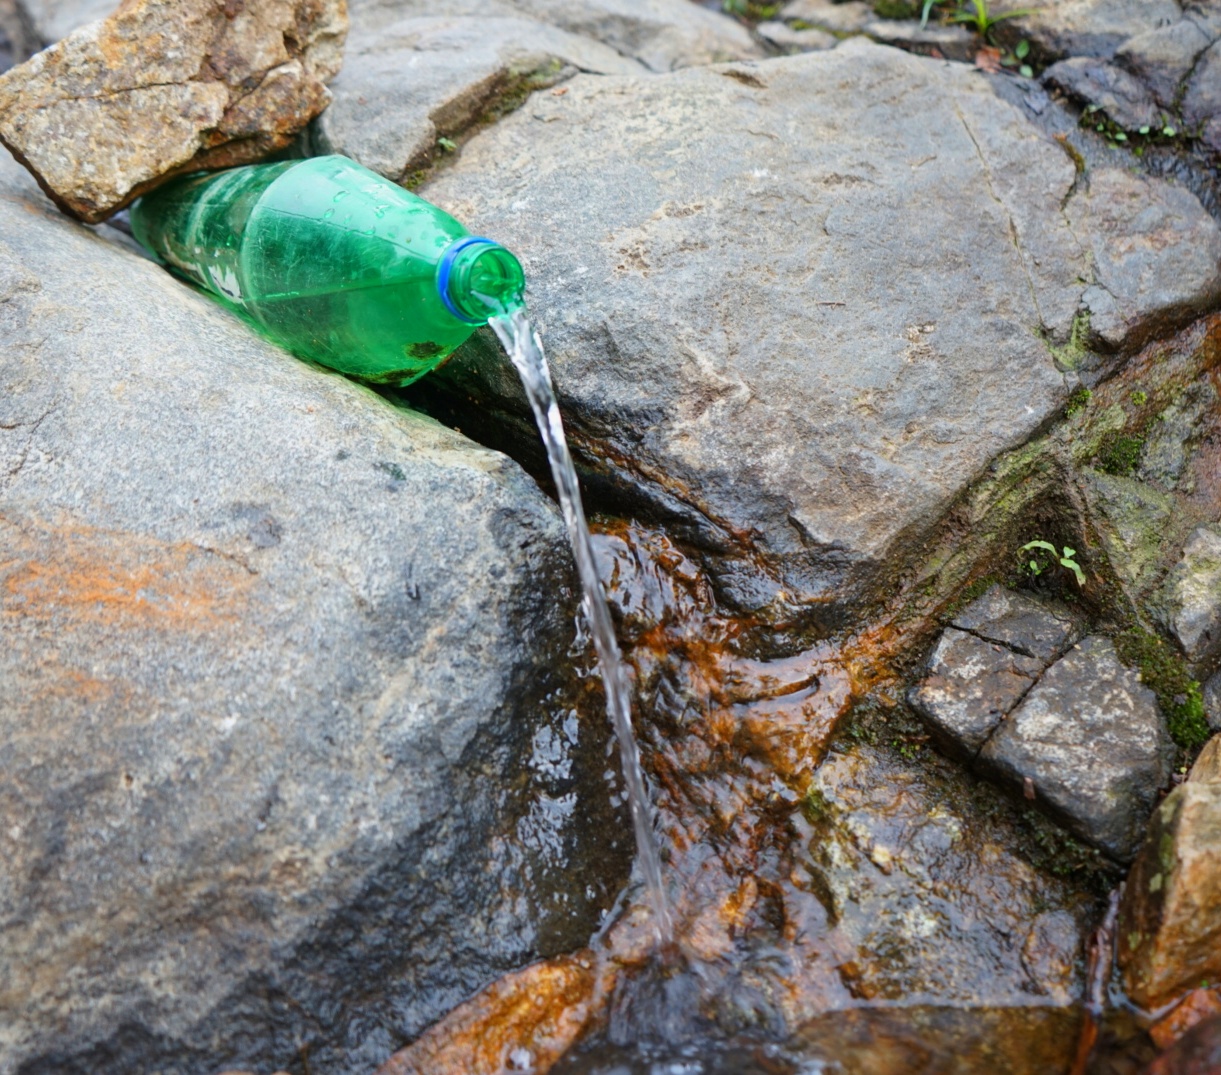 https://upload.wikimedia.org/wikipedia/commons/1/16/Water_through_a_bottle.jpg